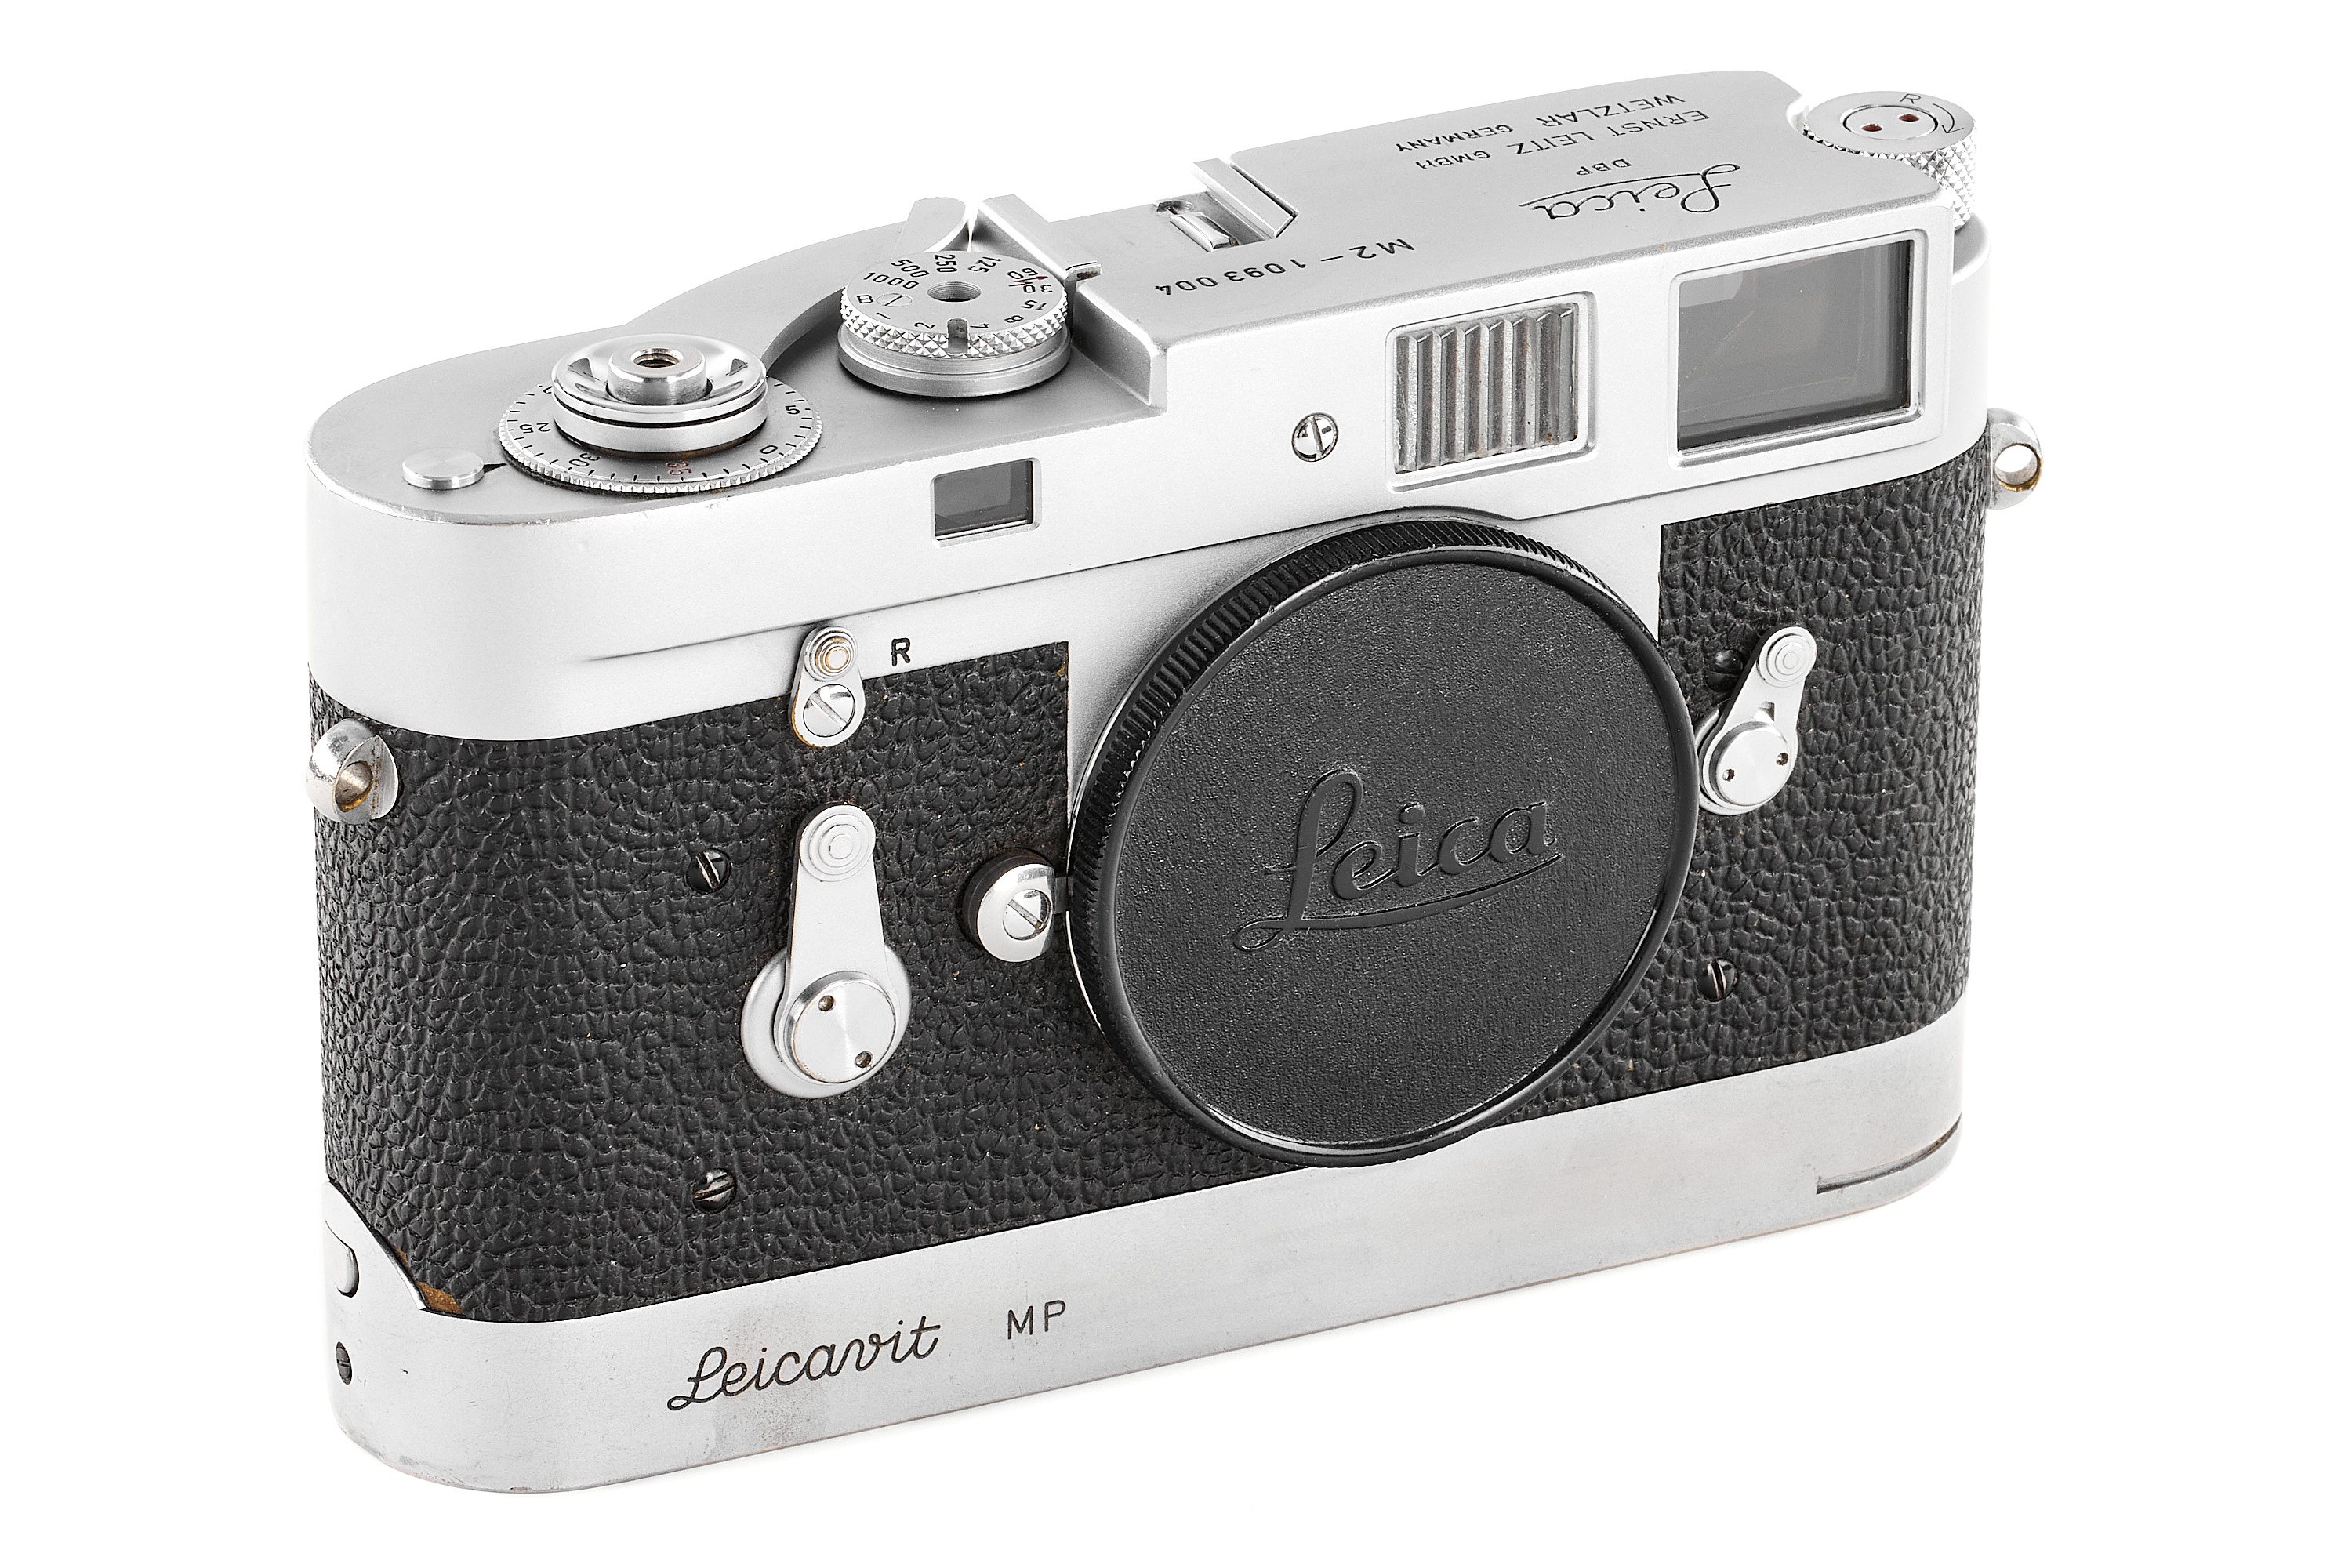 Leica M2 chrome with Leicavit MP